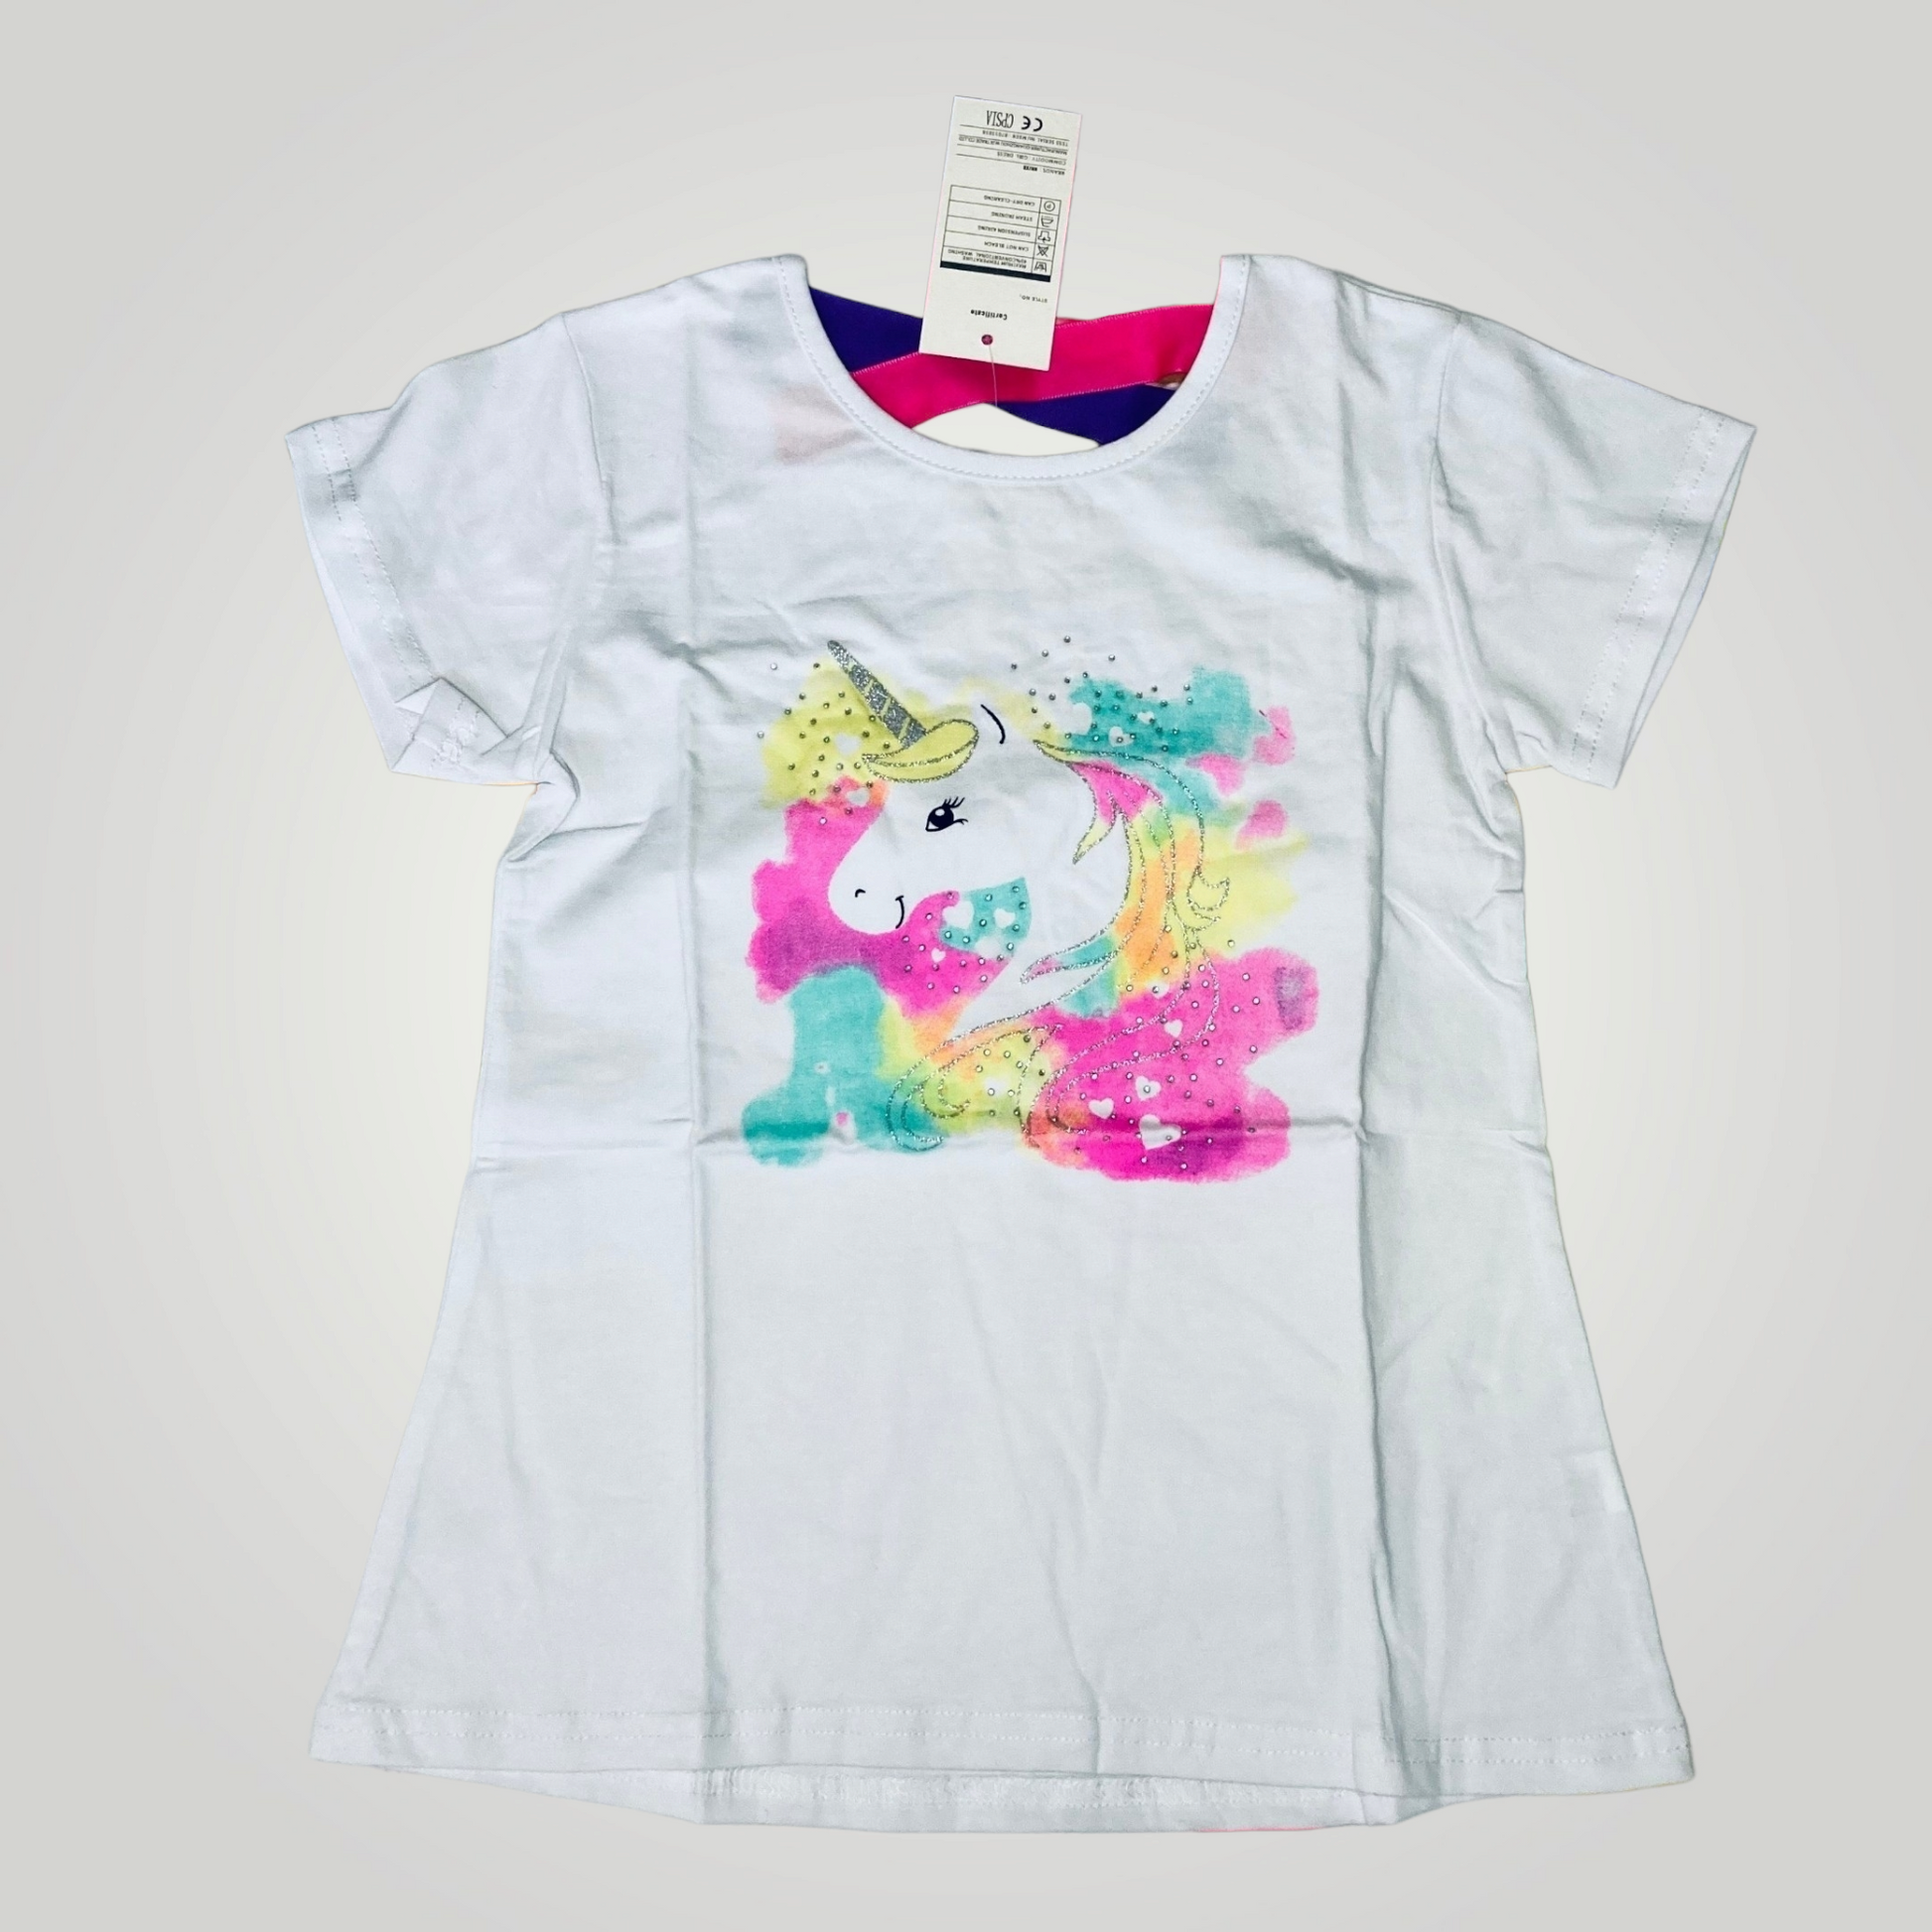 Sammie Jo Watercolor Unicorn T-Shirt